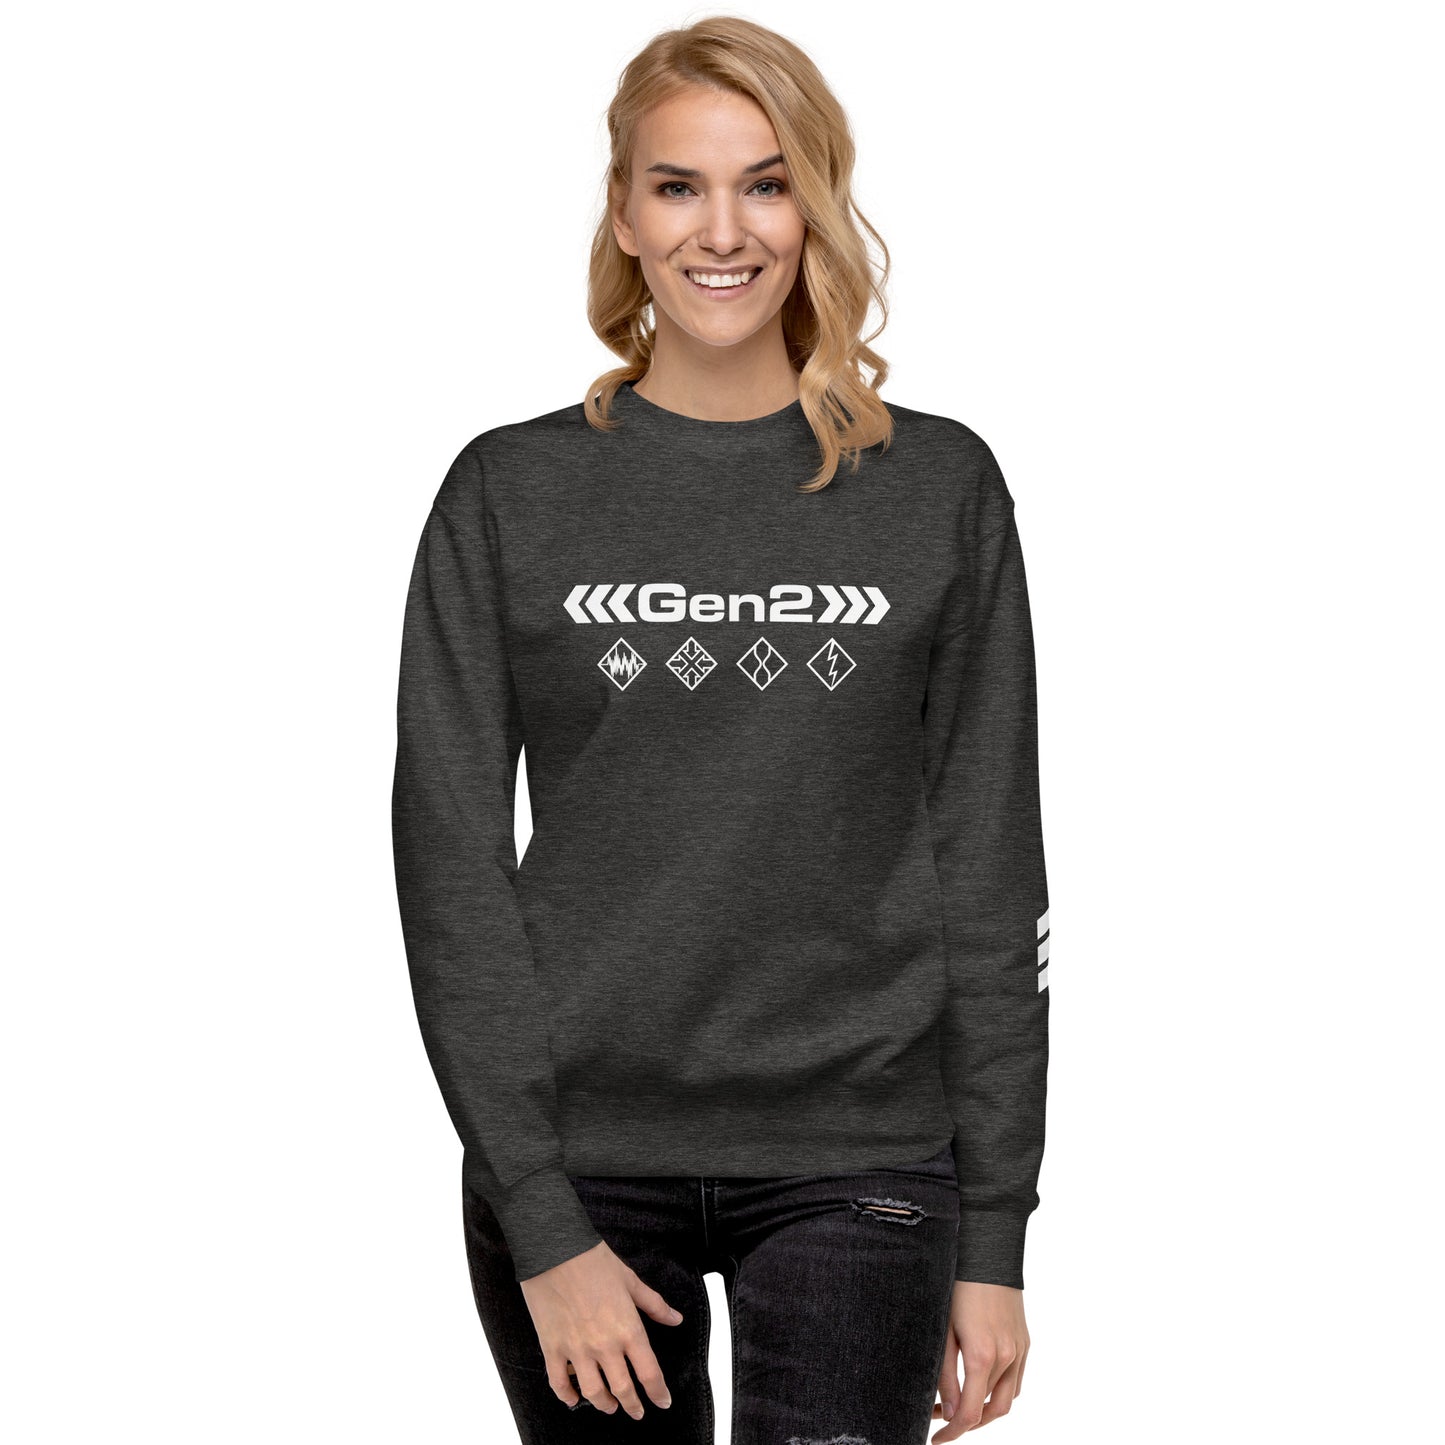 Gen2 "Future History Repeating" Unisex Sweatshirt